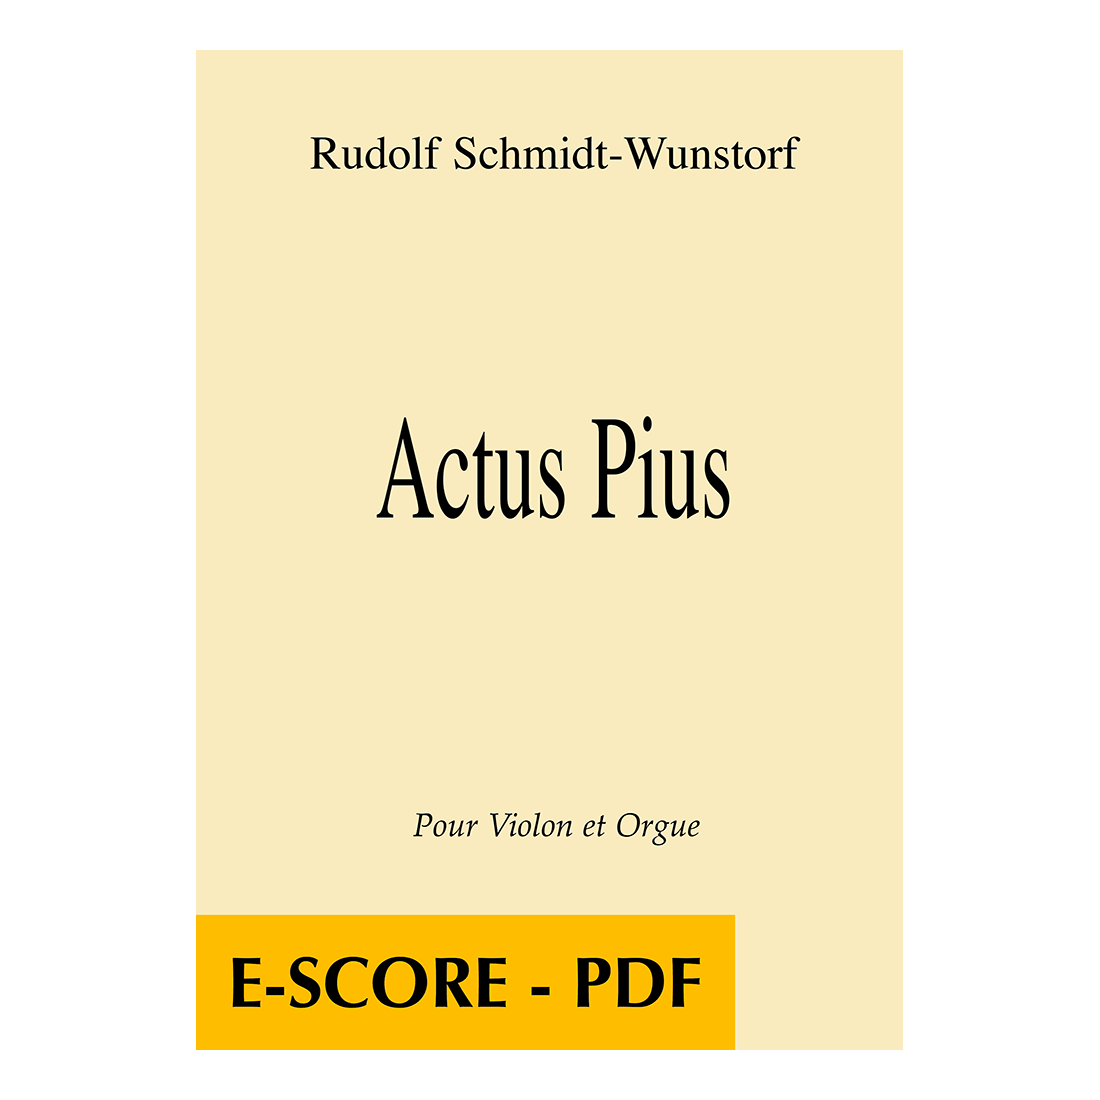 Actus Pius for violin and organ - E-score PDF